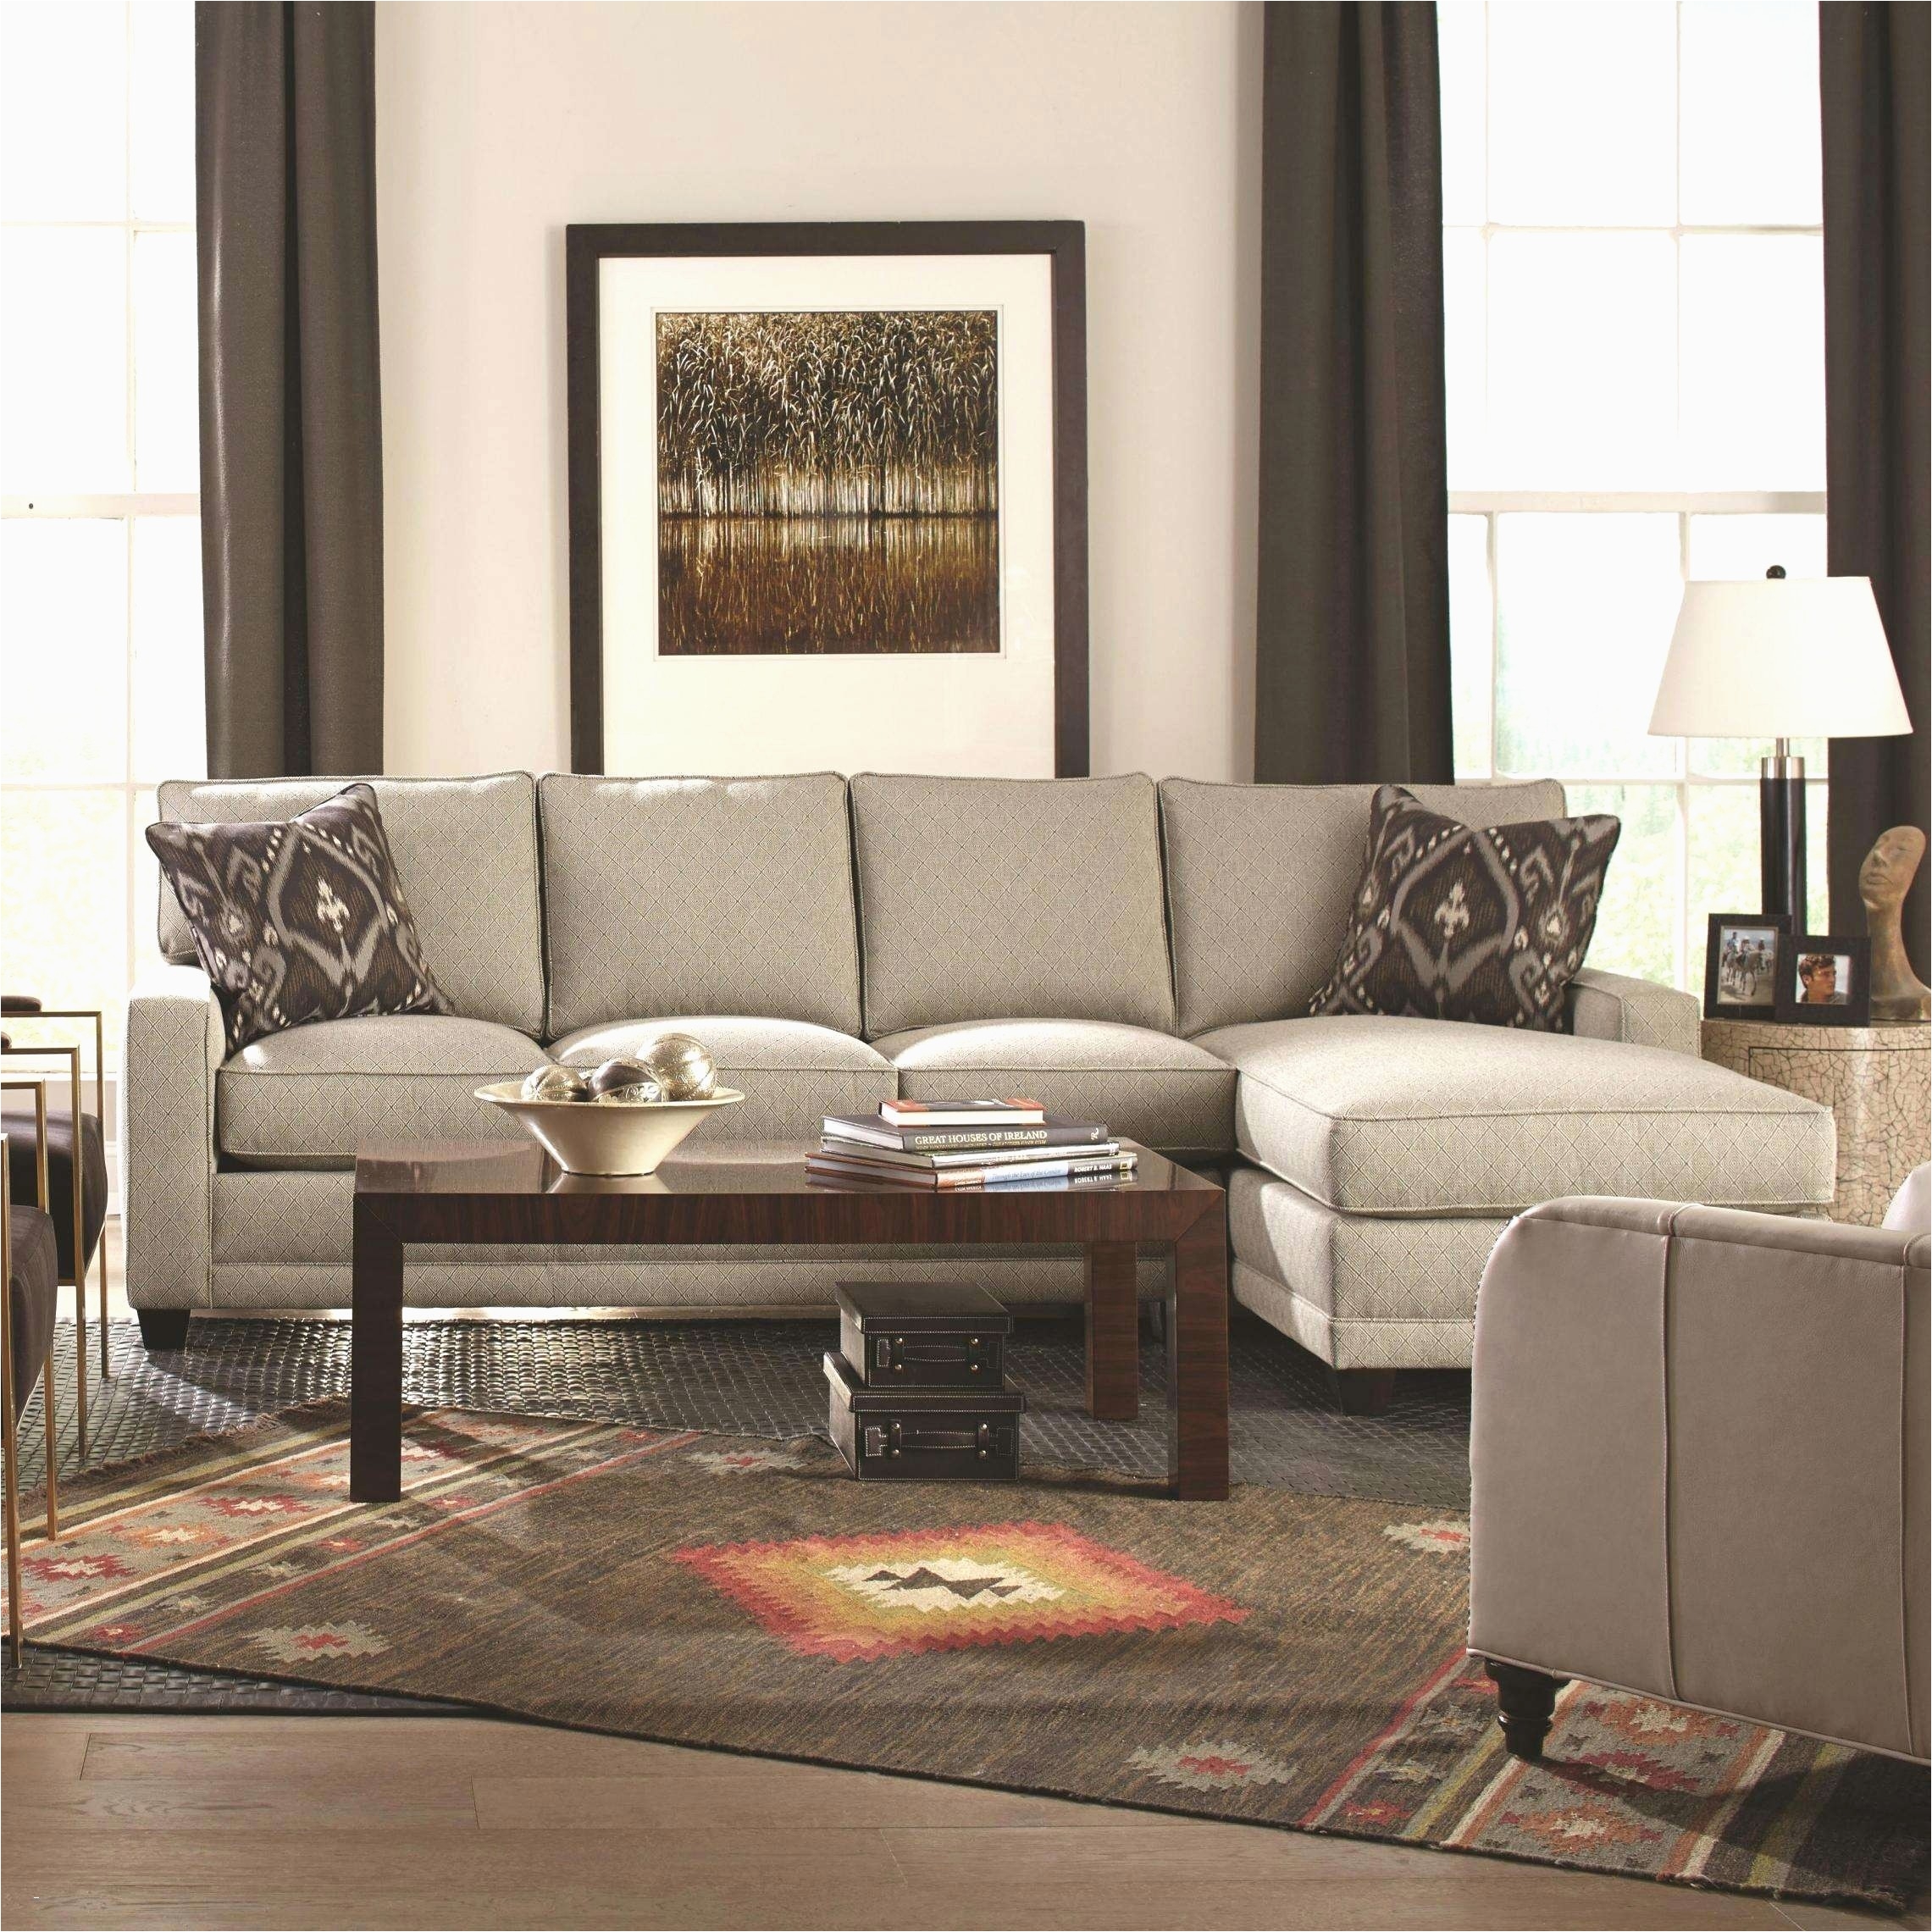 50 of 50 fresh nebraska furniture mart sofa sleeper pics august 2018